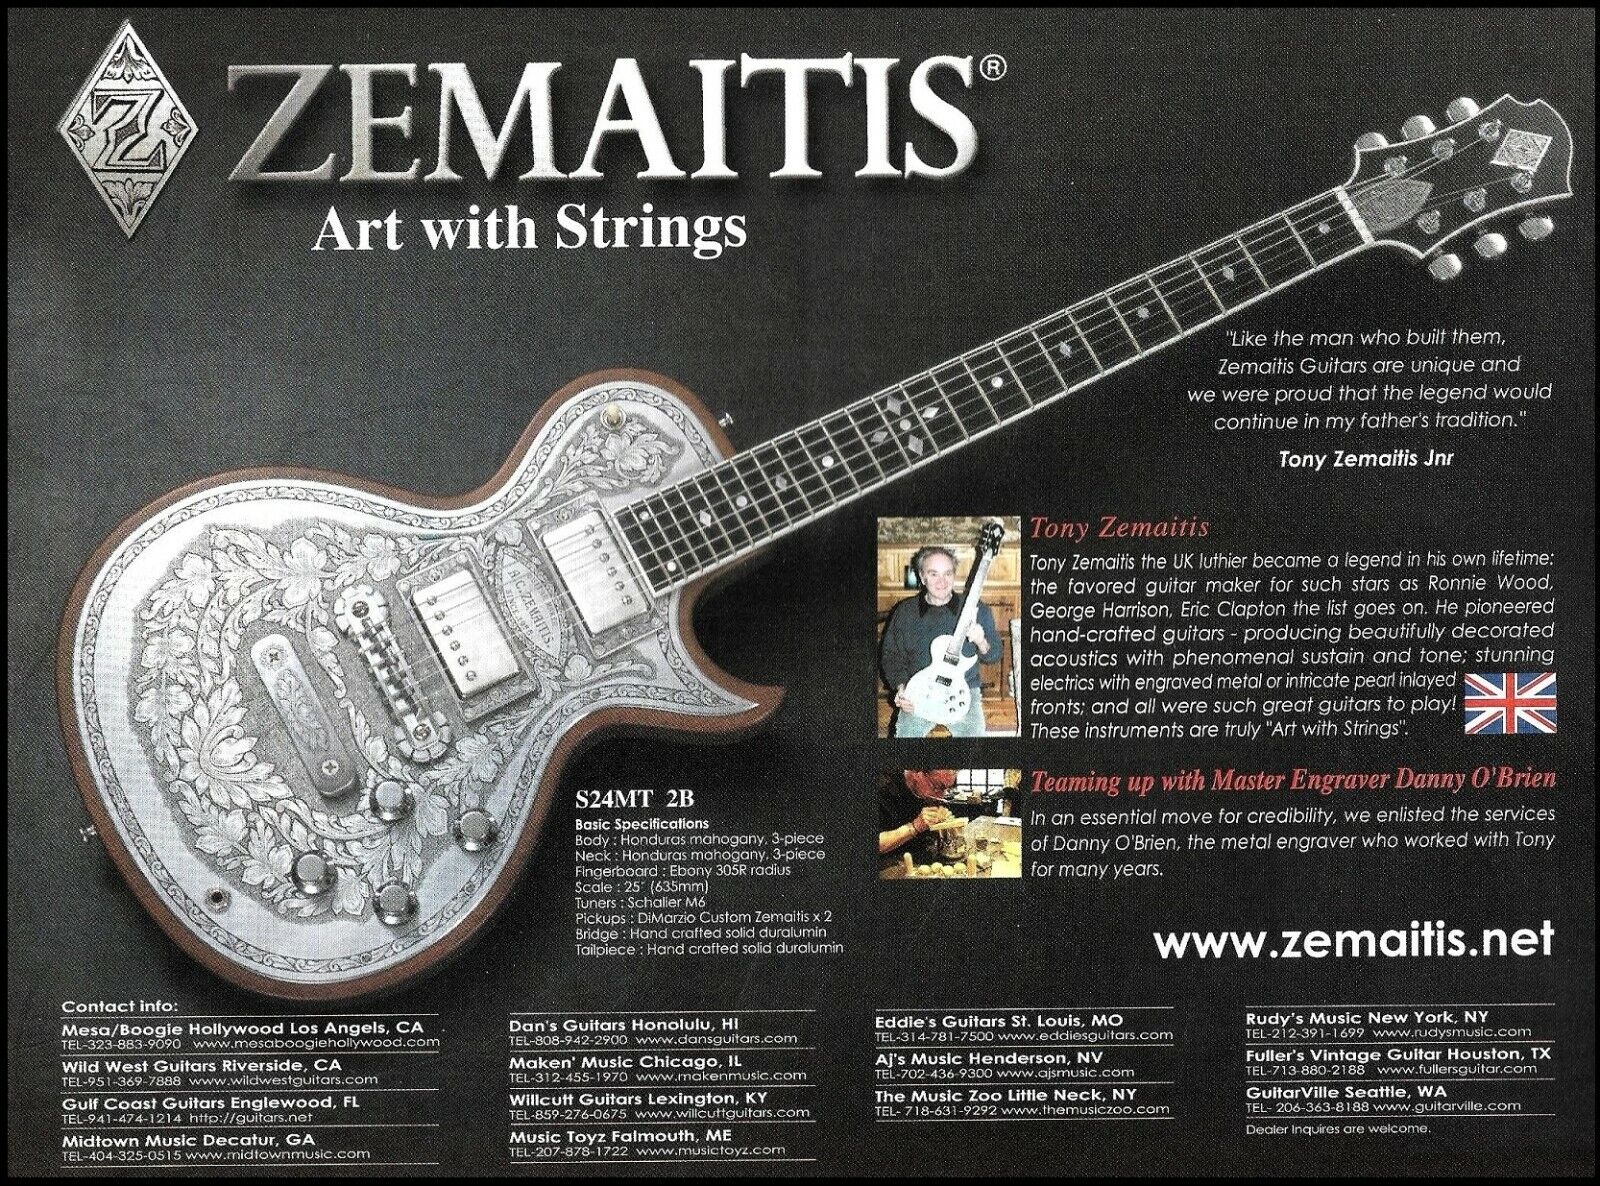 Tony Zemaitis S24MT 2B metal engraved guitar ad 2006 advertisement print